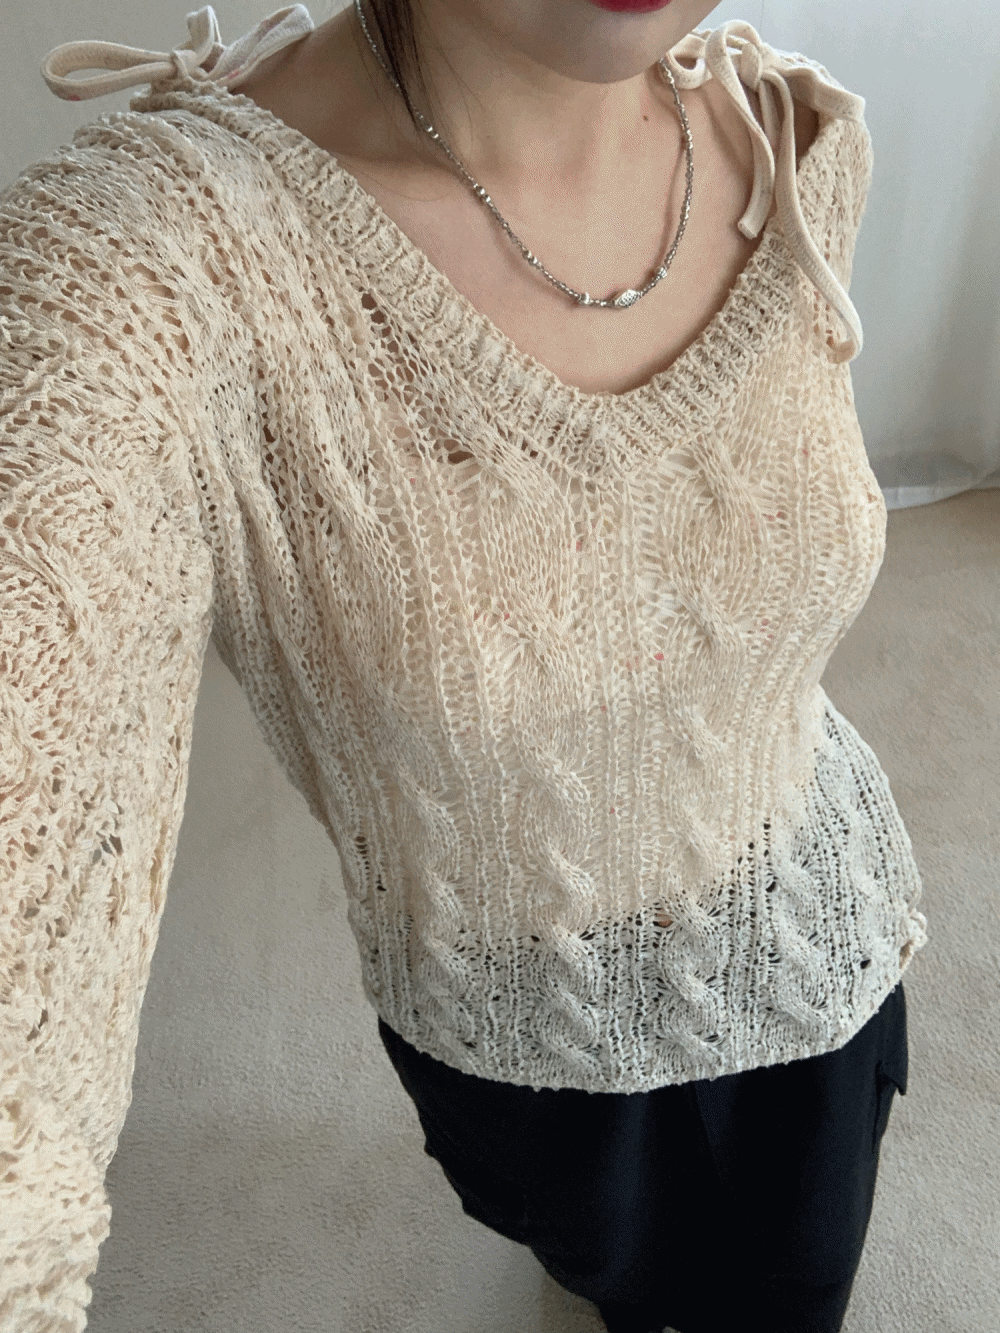 [Top] Miami crochet knit / 2 colors